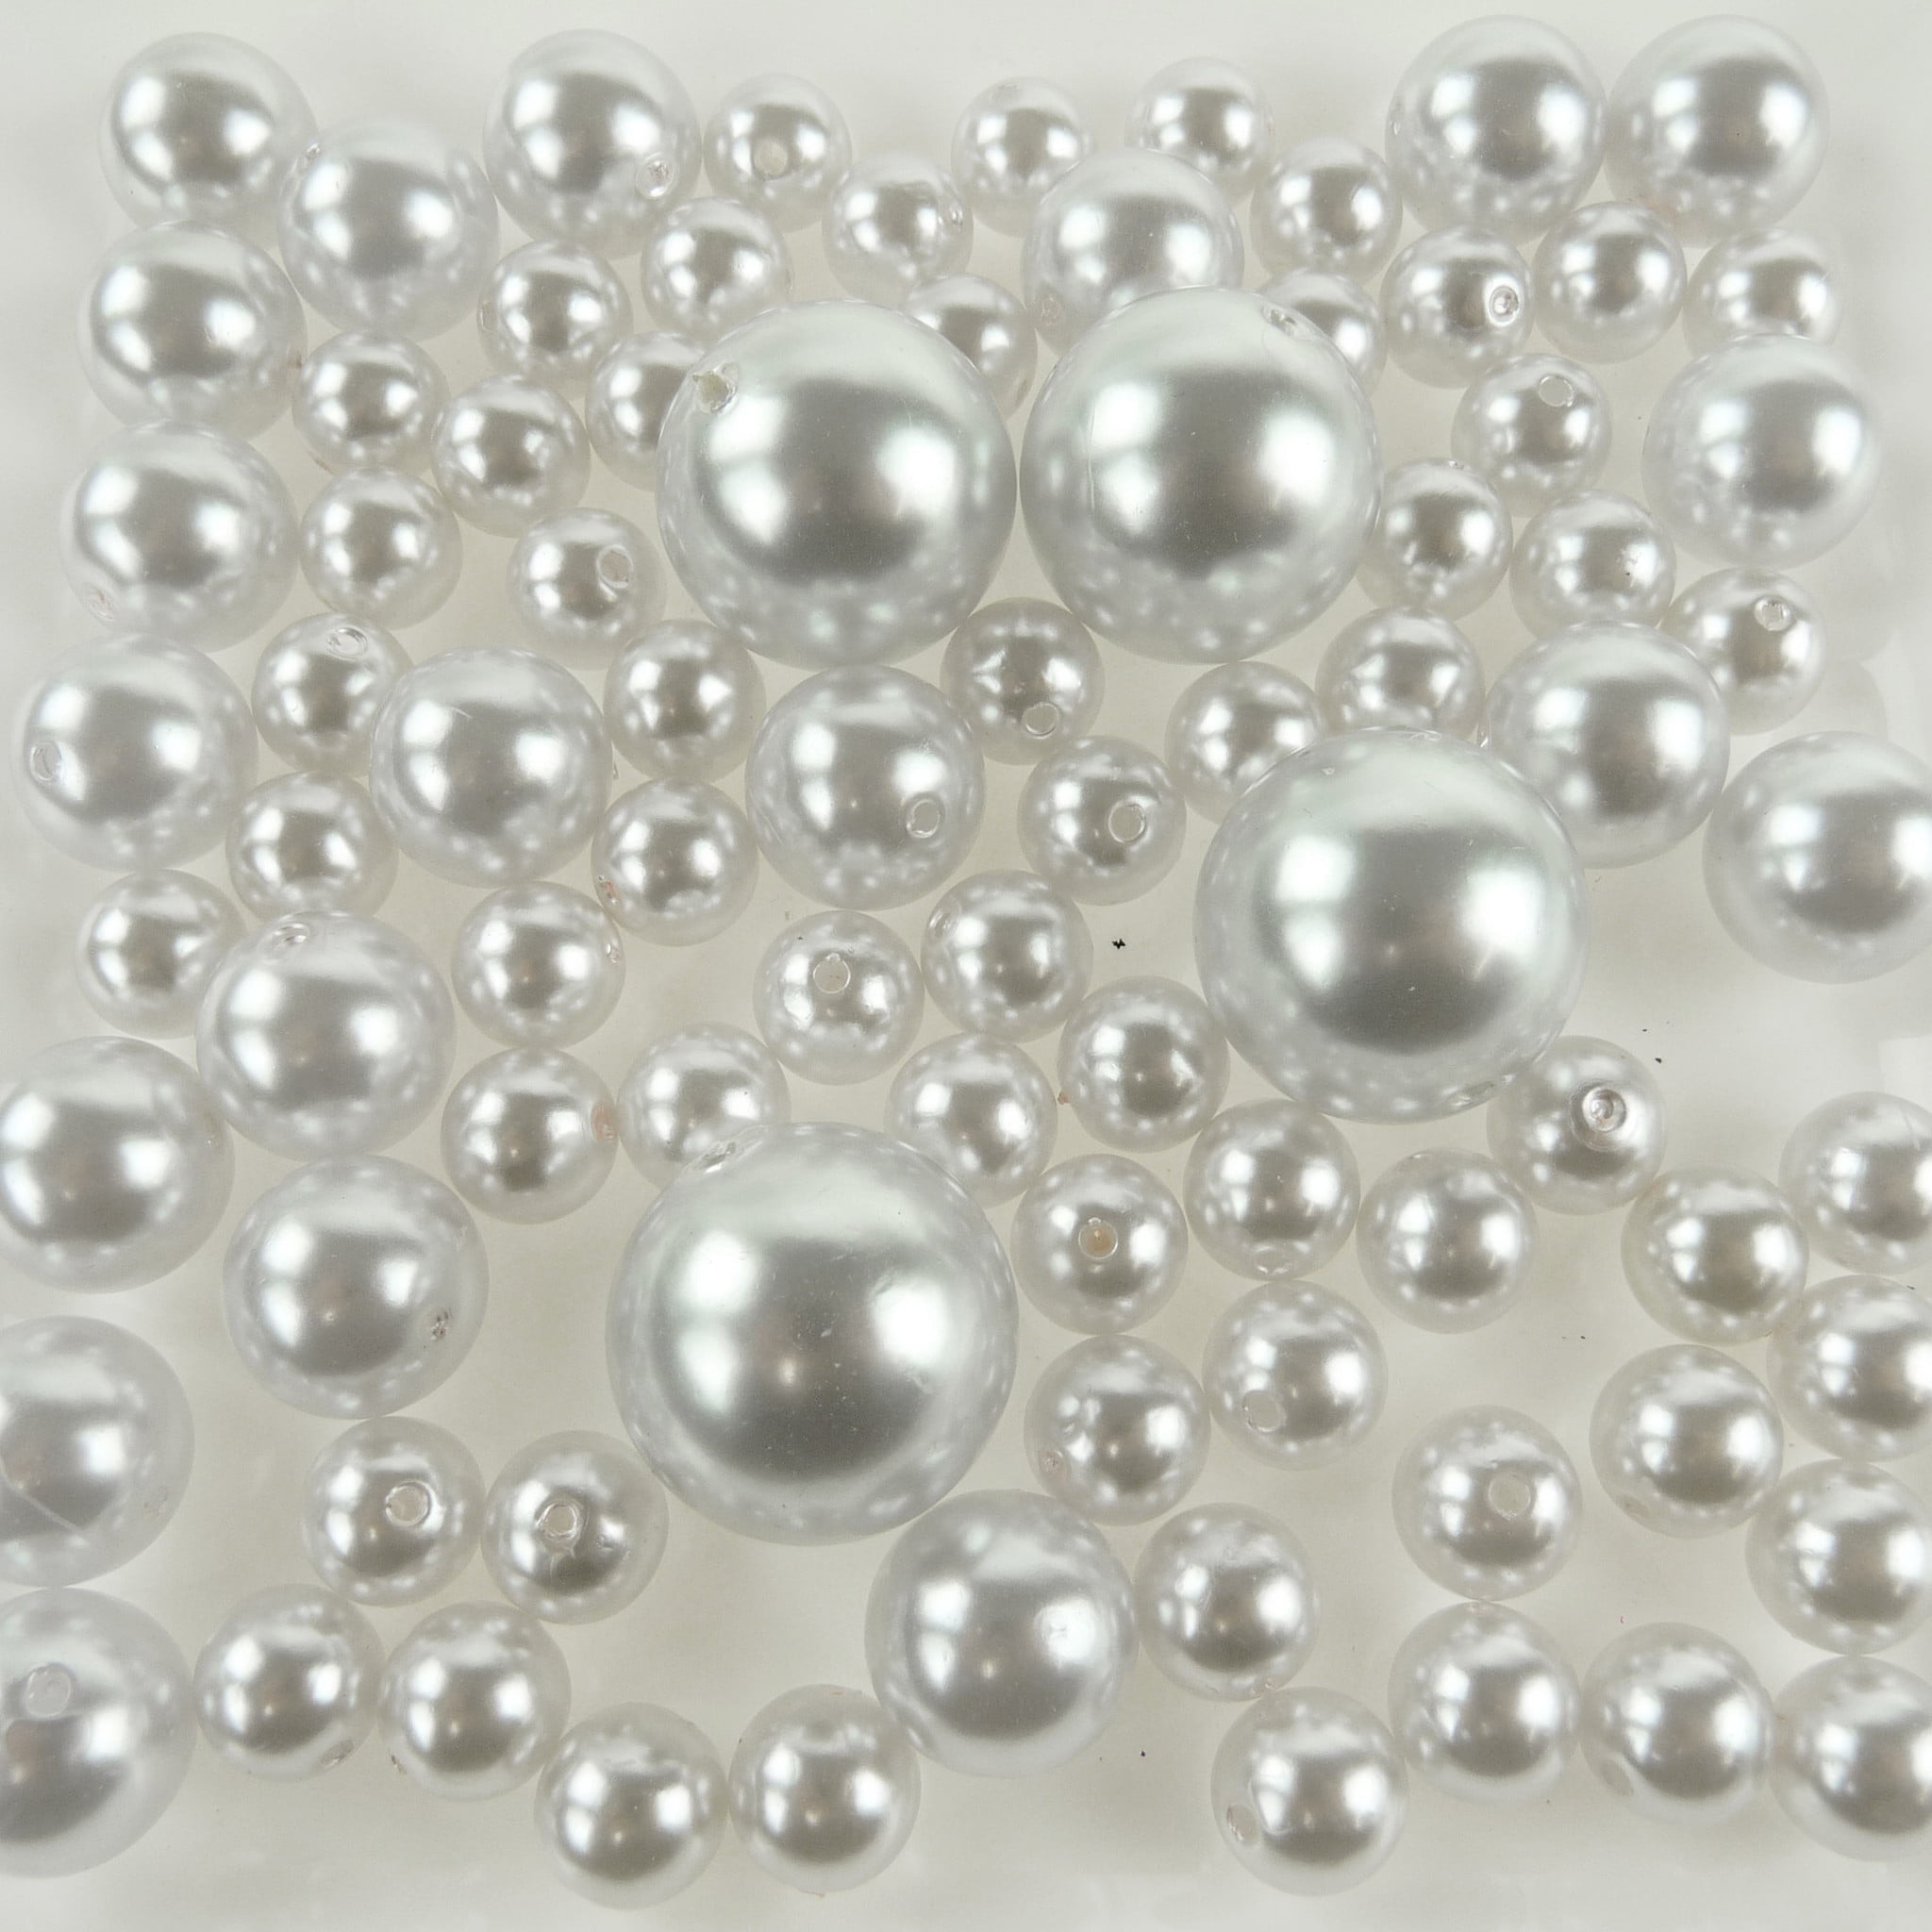 1lb Plastic Pearls Balls Beads Marbles Sphere Vase Filler Table Scatter Wedding 